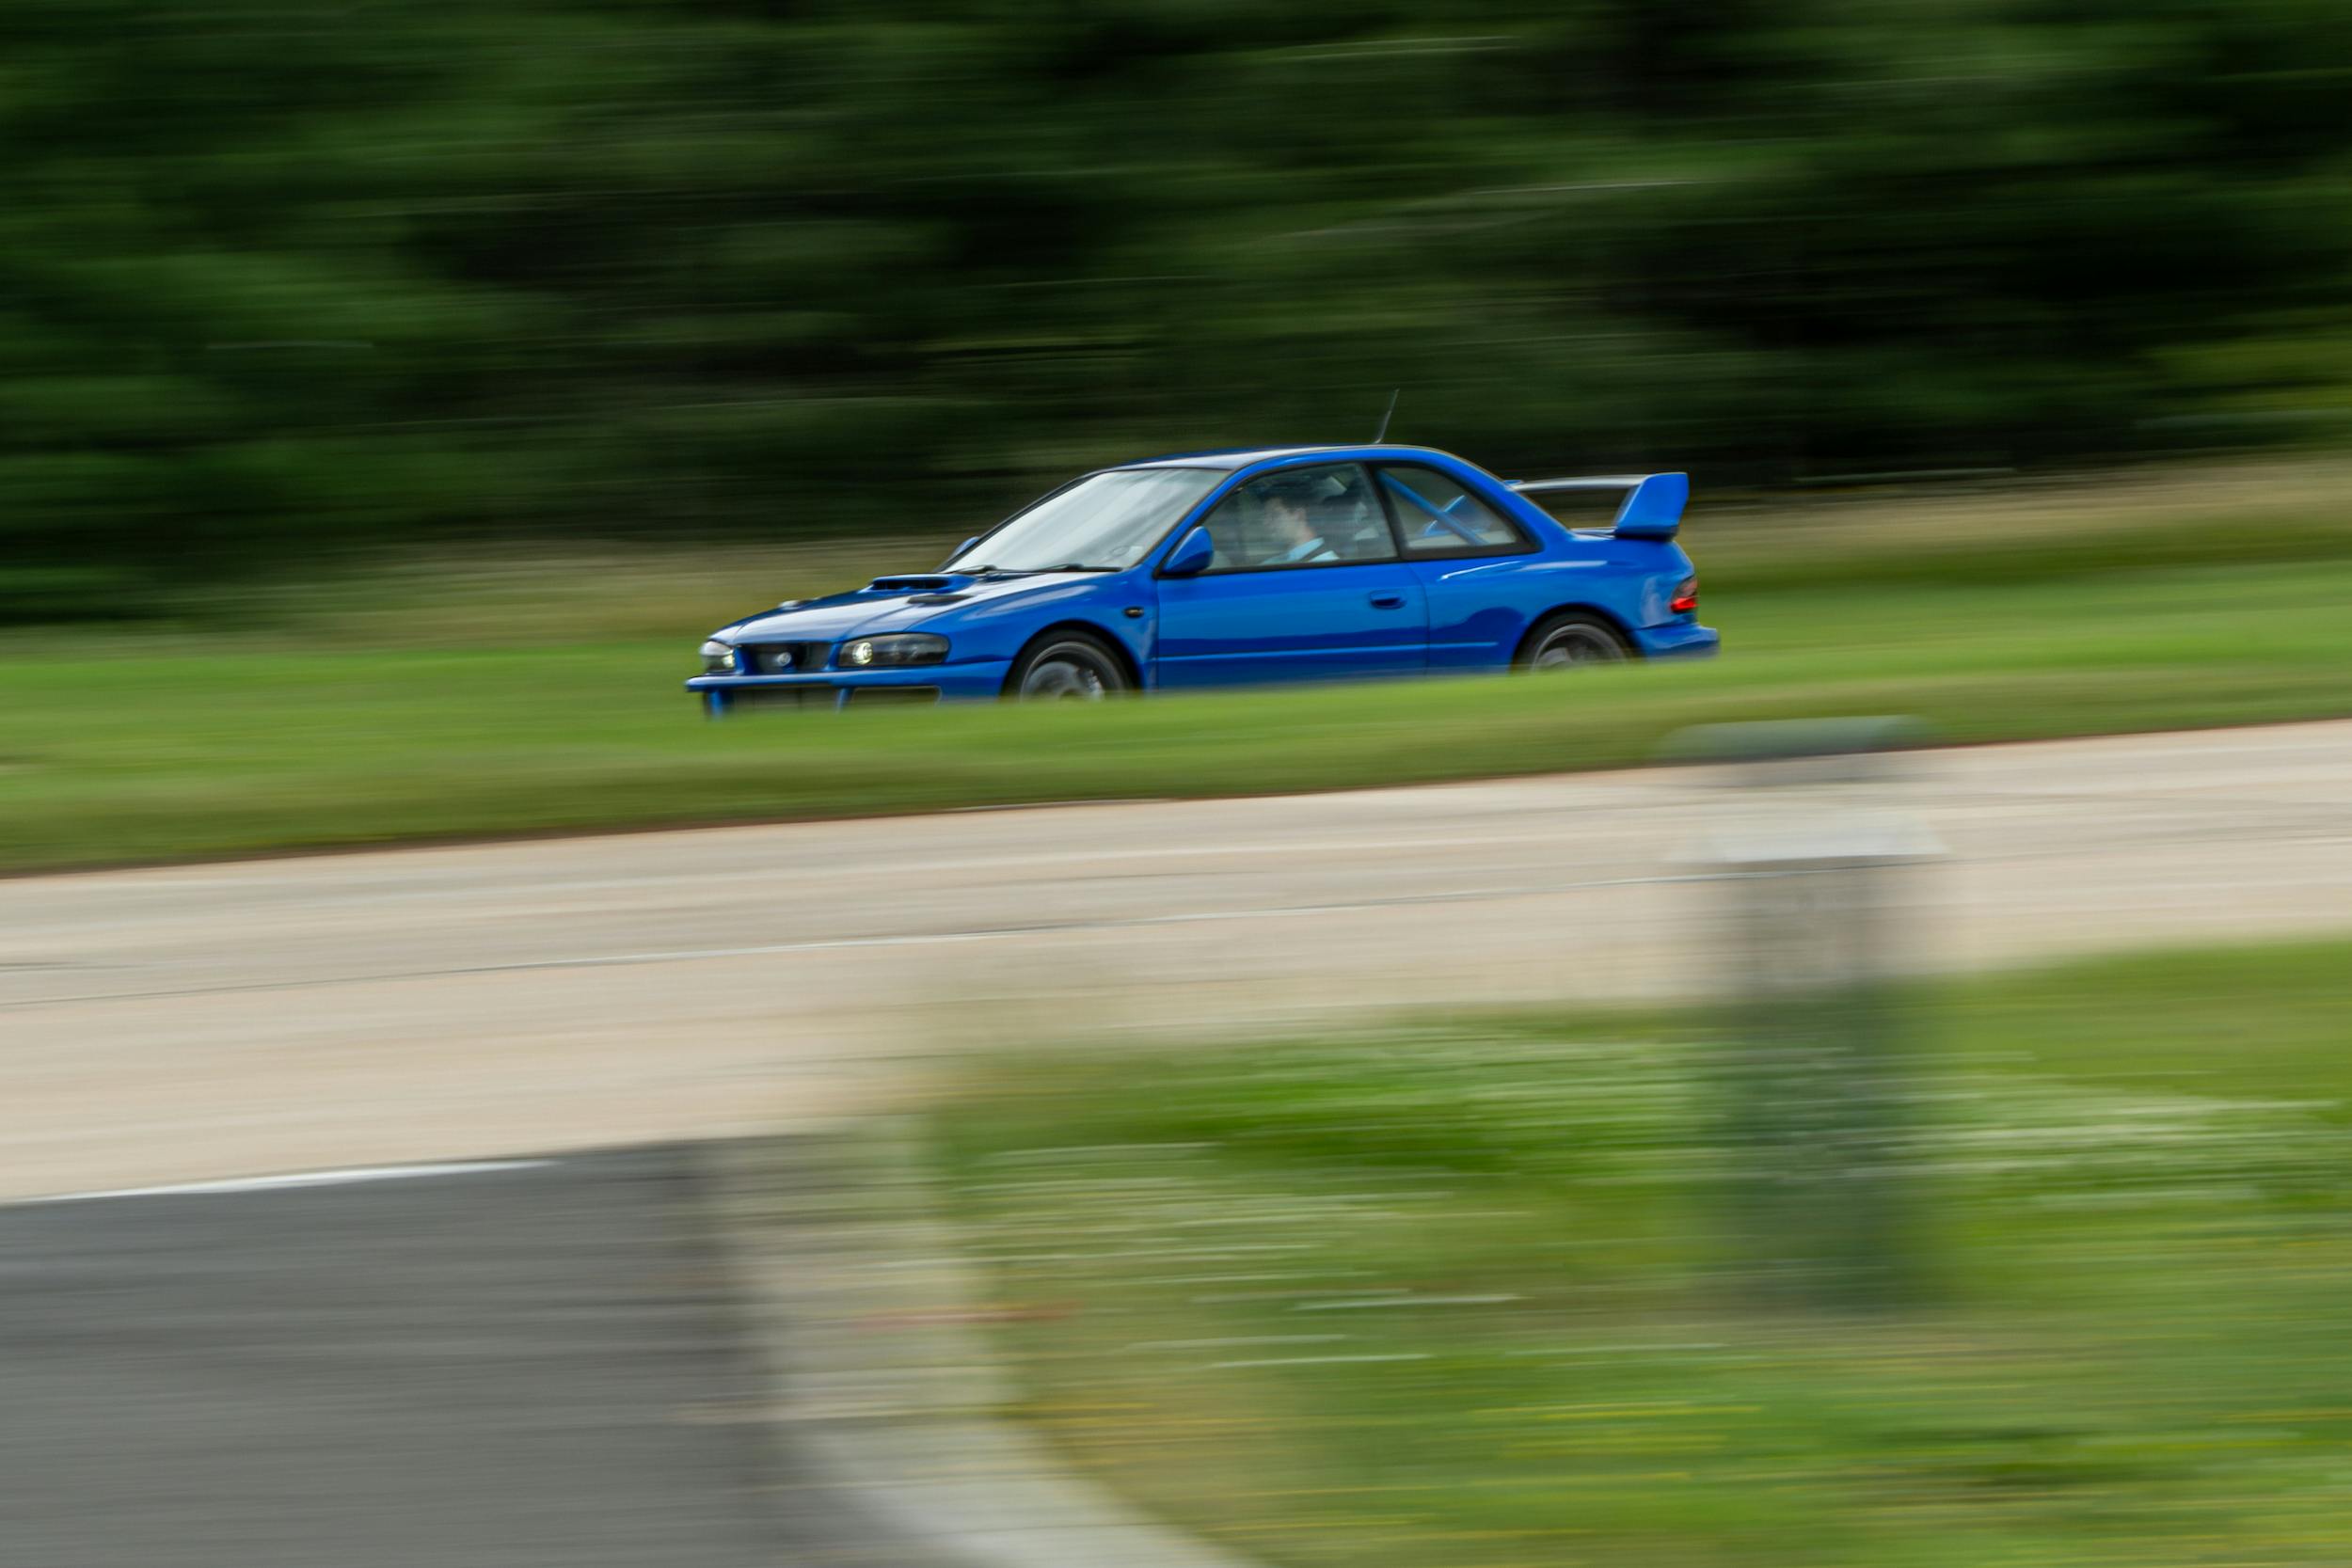 These Two Subaru Impreza WRX STI Type Rs Are Proper Road-Going Rally Cars